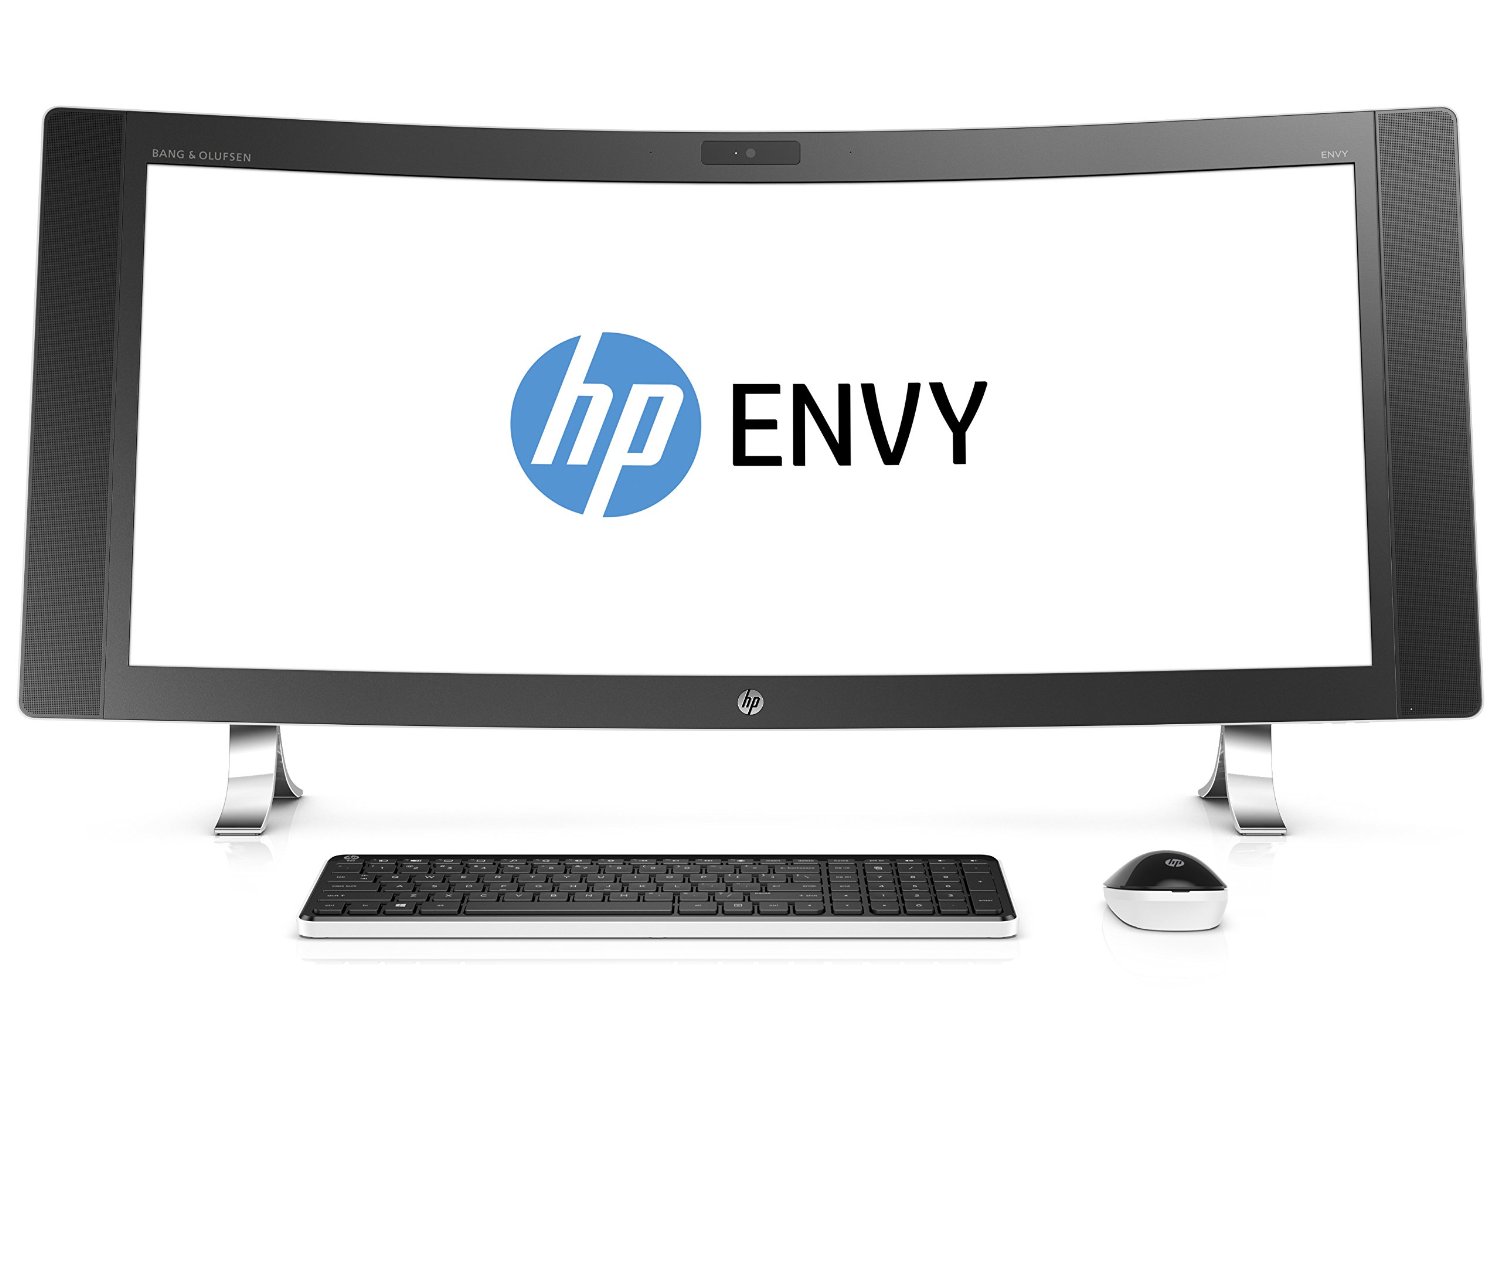 HP Envy 34-a150 All-in-One Desktop PC 01